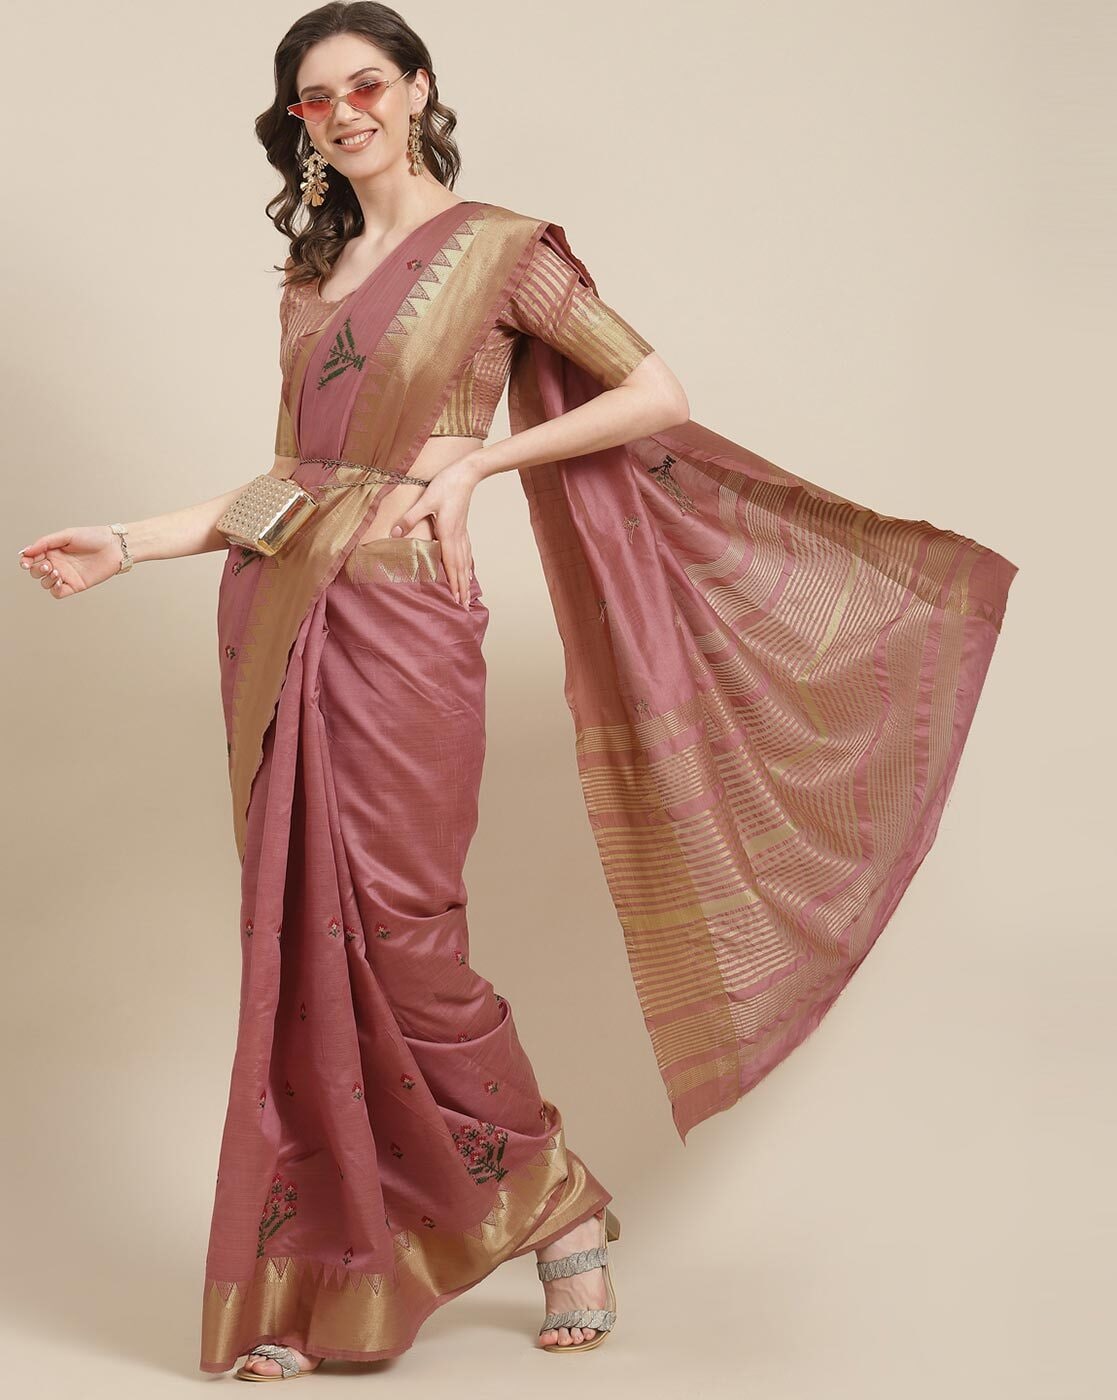 Fabindia - We absolutely love your sari style Preeti! You look stunning in  that #Fabindia black tussar sari with beautiful bagh prints and maroon  highlights. #CelebrateIndia #FabindiaWomen #IndianWear #IndianFashion  #EthnicWear #StyleGram #StyleInspo #